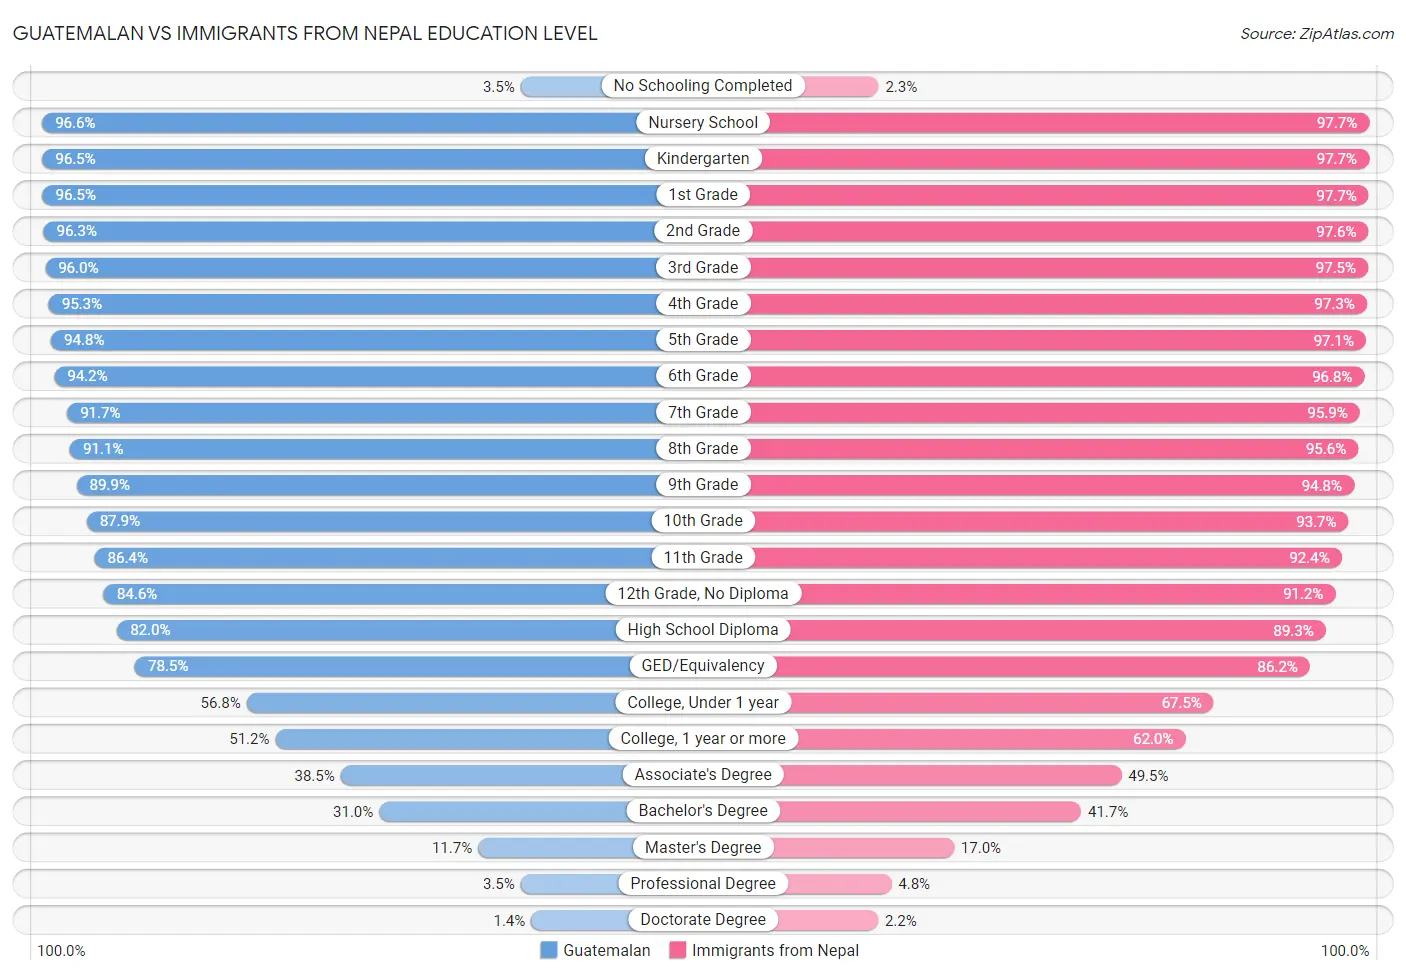 Guatemalan vs Immigrants from Nepal Education Level